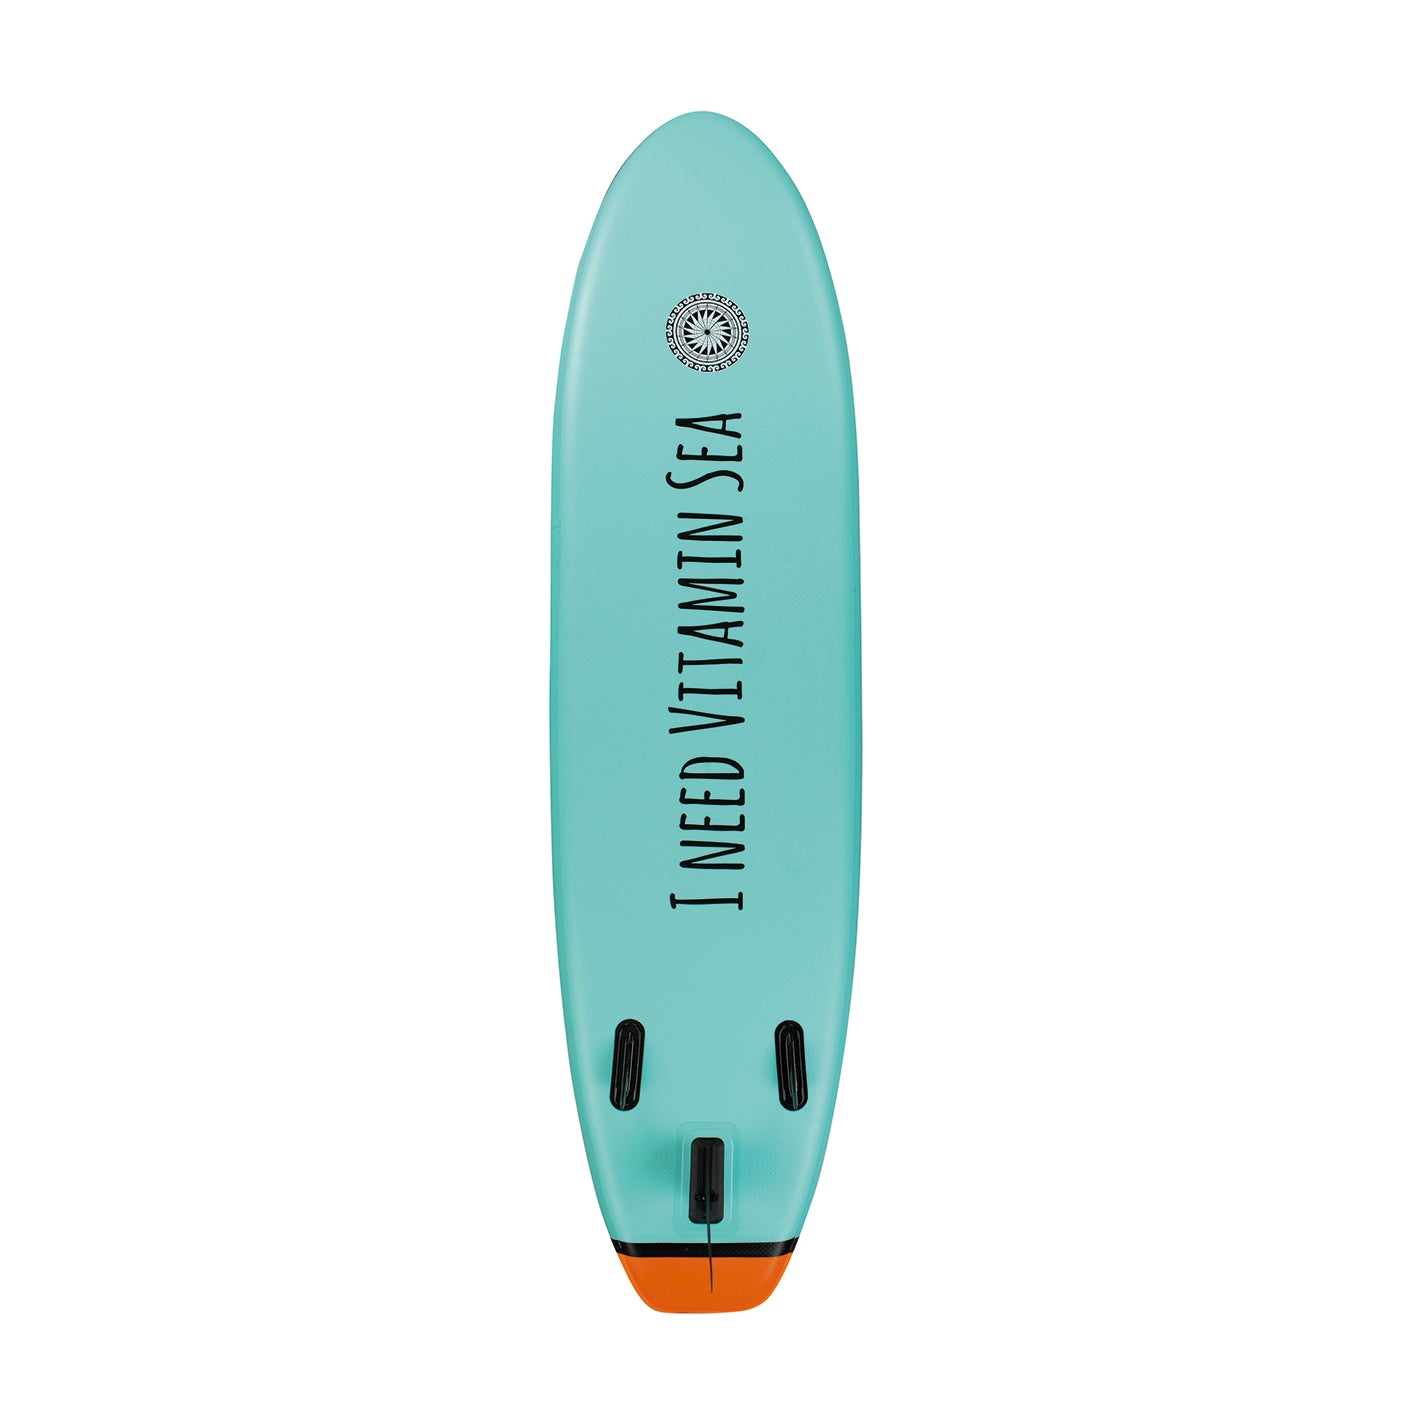 Stand-Up Paddle-Board - 2020 - 300cm - weiß/blau